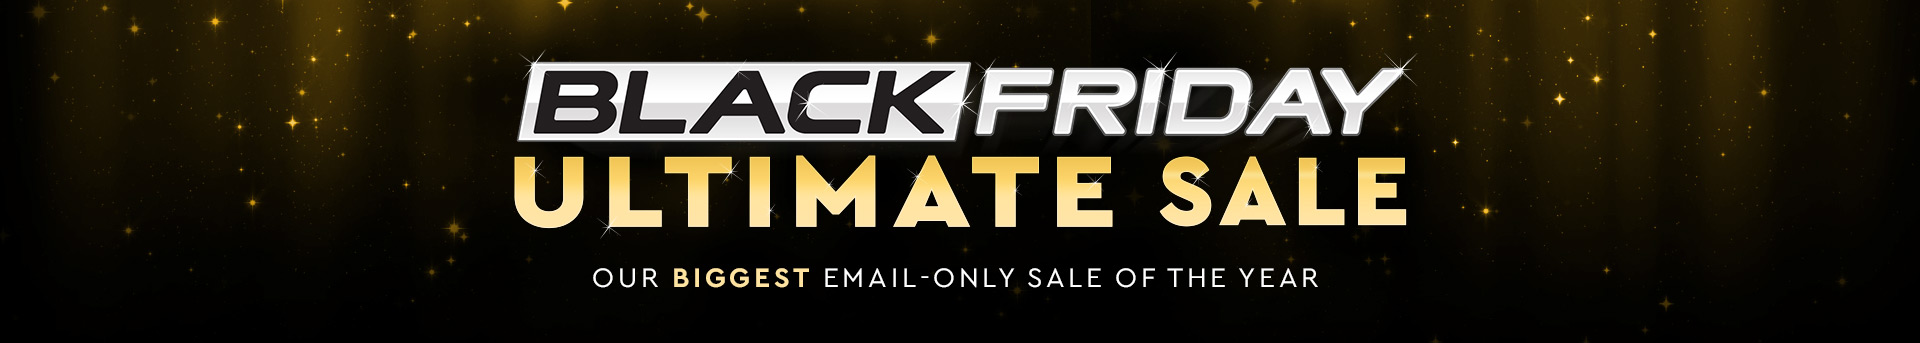 Black Friday Ultimate Sale